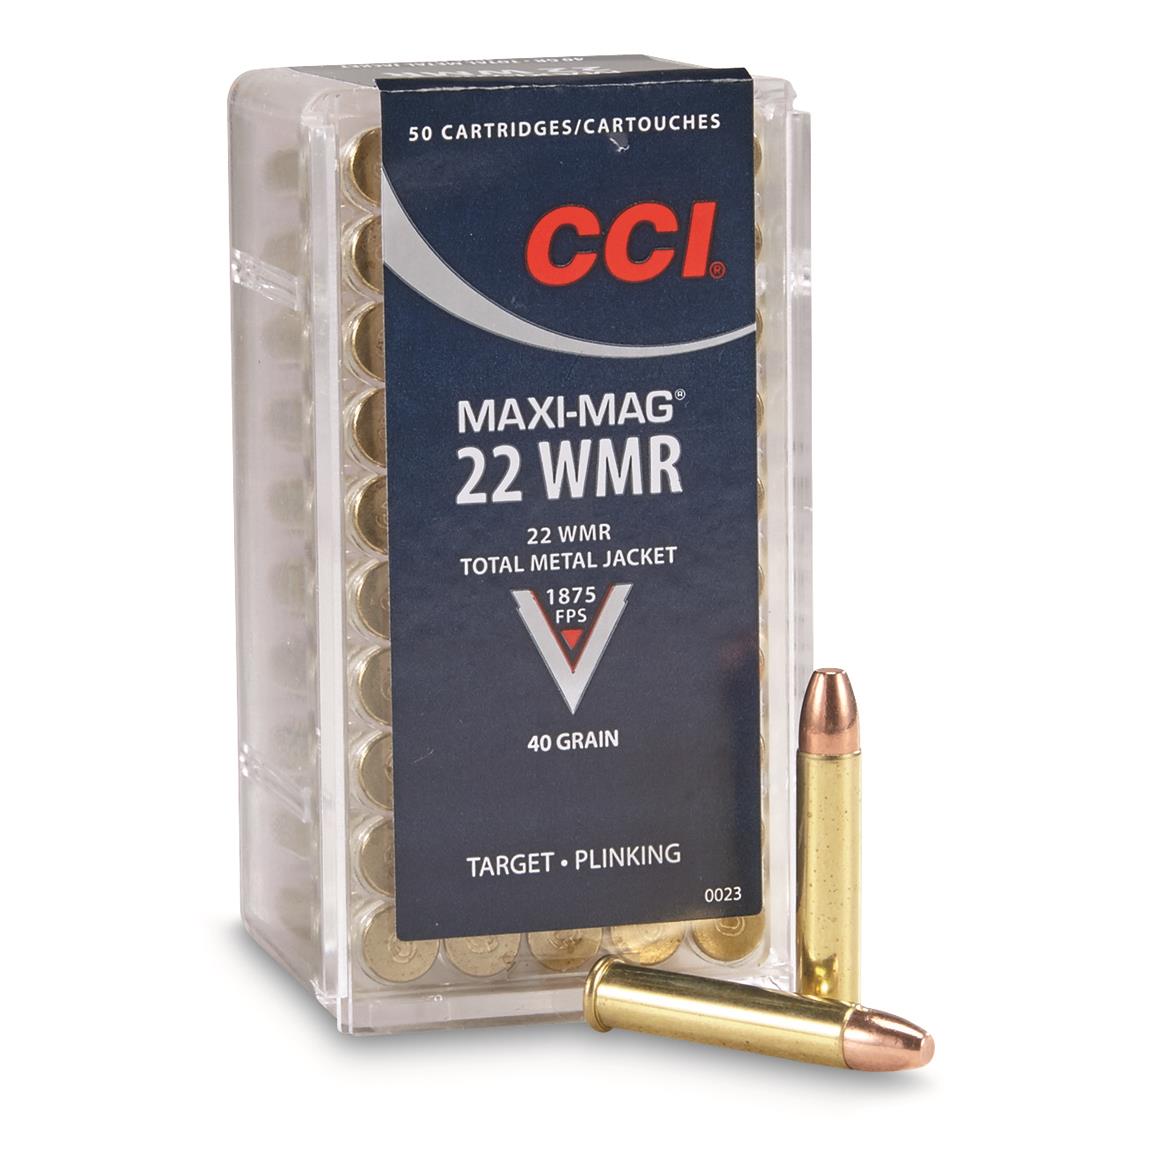 Cci Maxi Mag 22 Wmr Tmj 40 Grain 50 Rounds 10601 22 Magnum Ammo At Sportsmans Guide